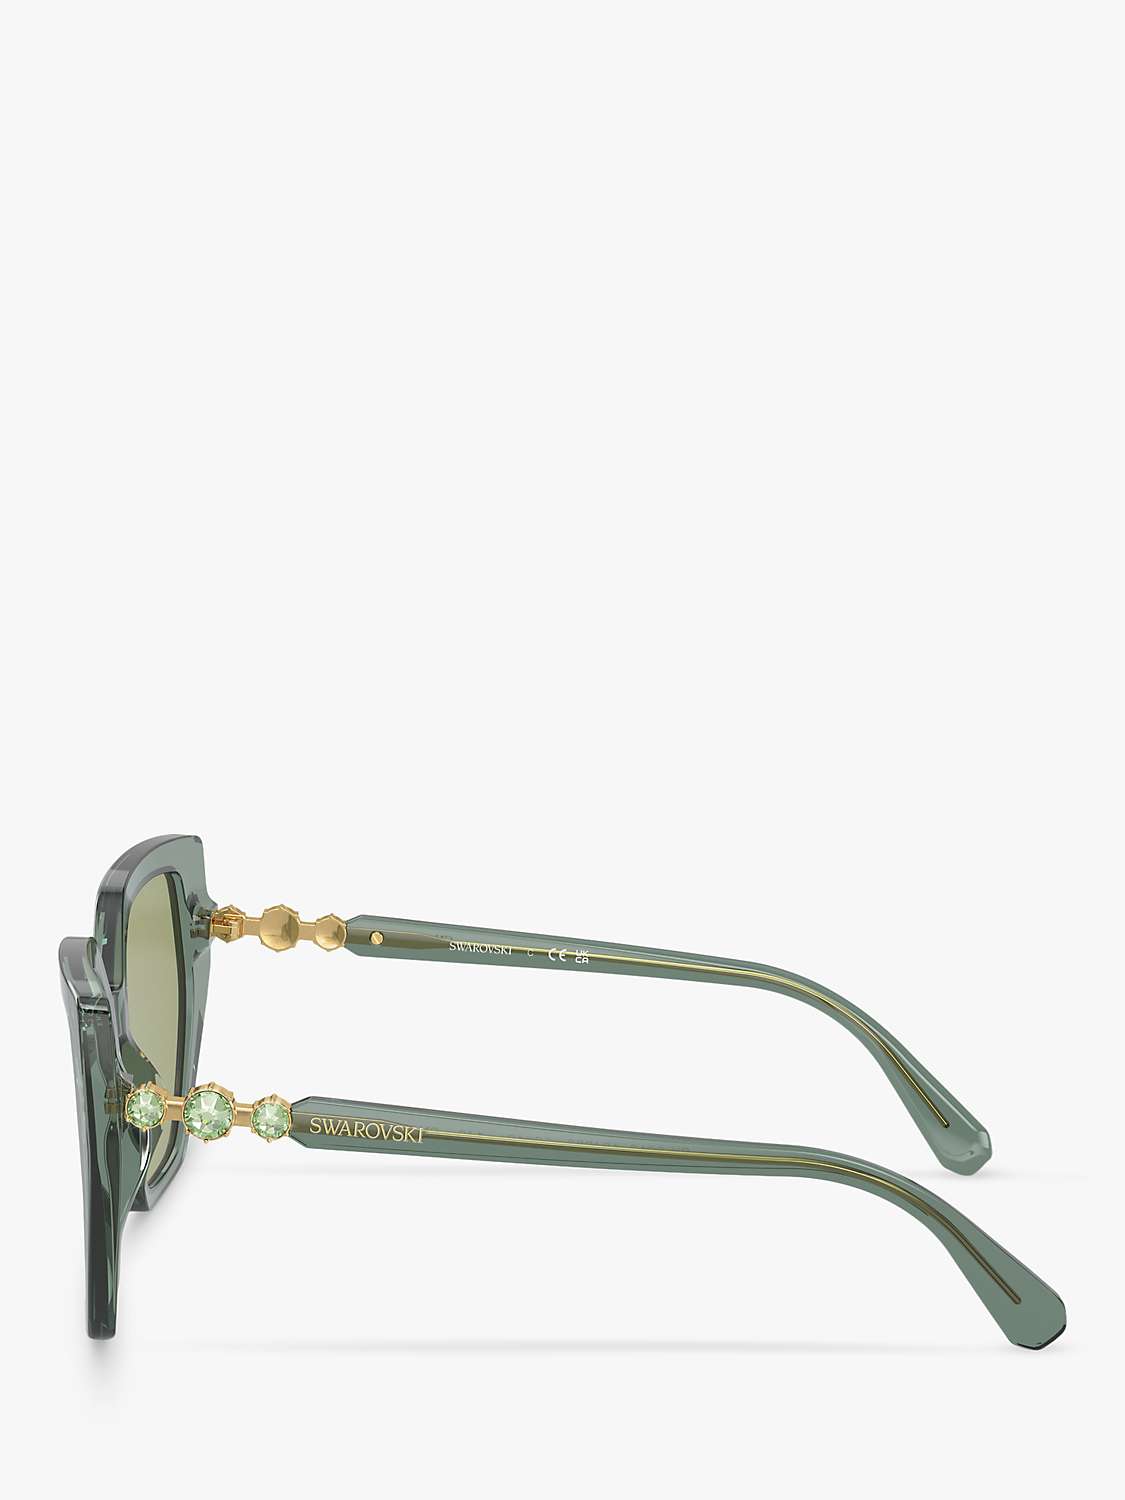 Buy Swarovski SK6016 Women's Irregular Sunglasses Online at johnlewis.com